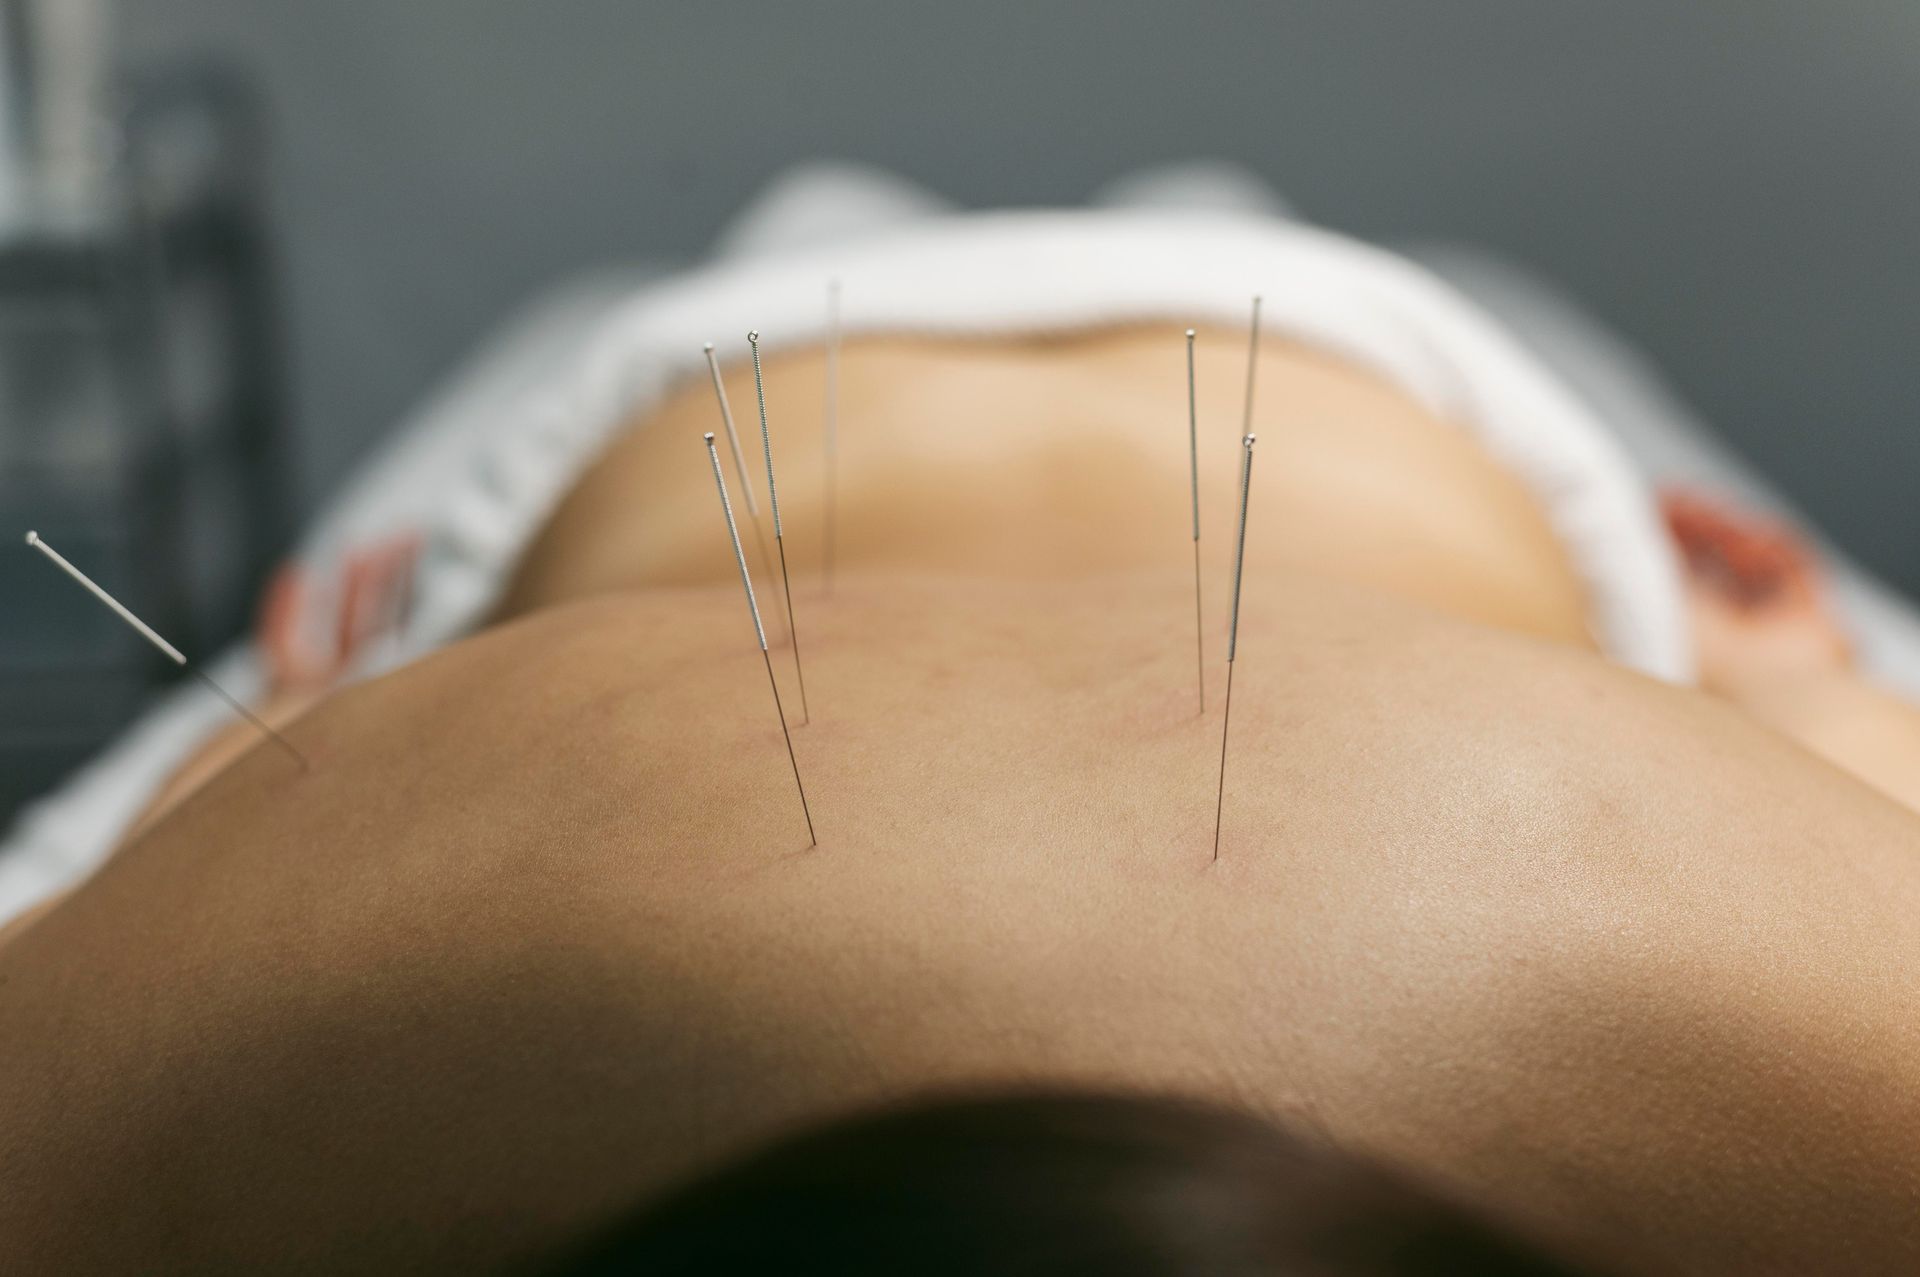 acupuncture session